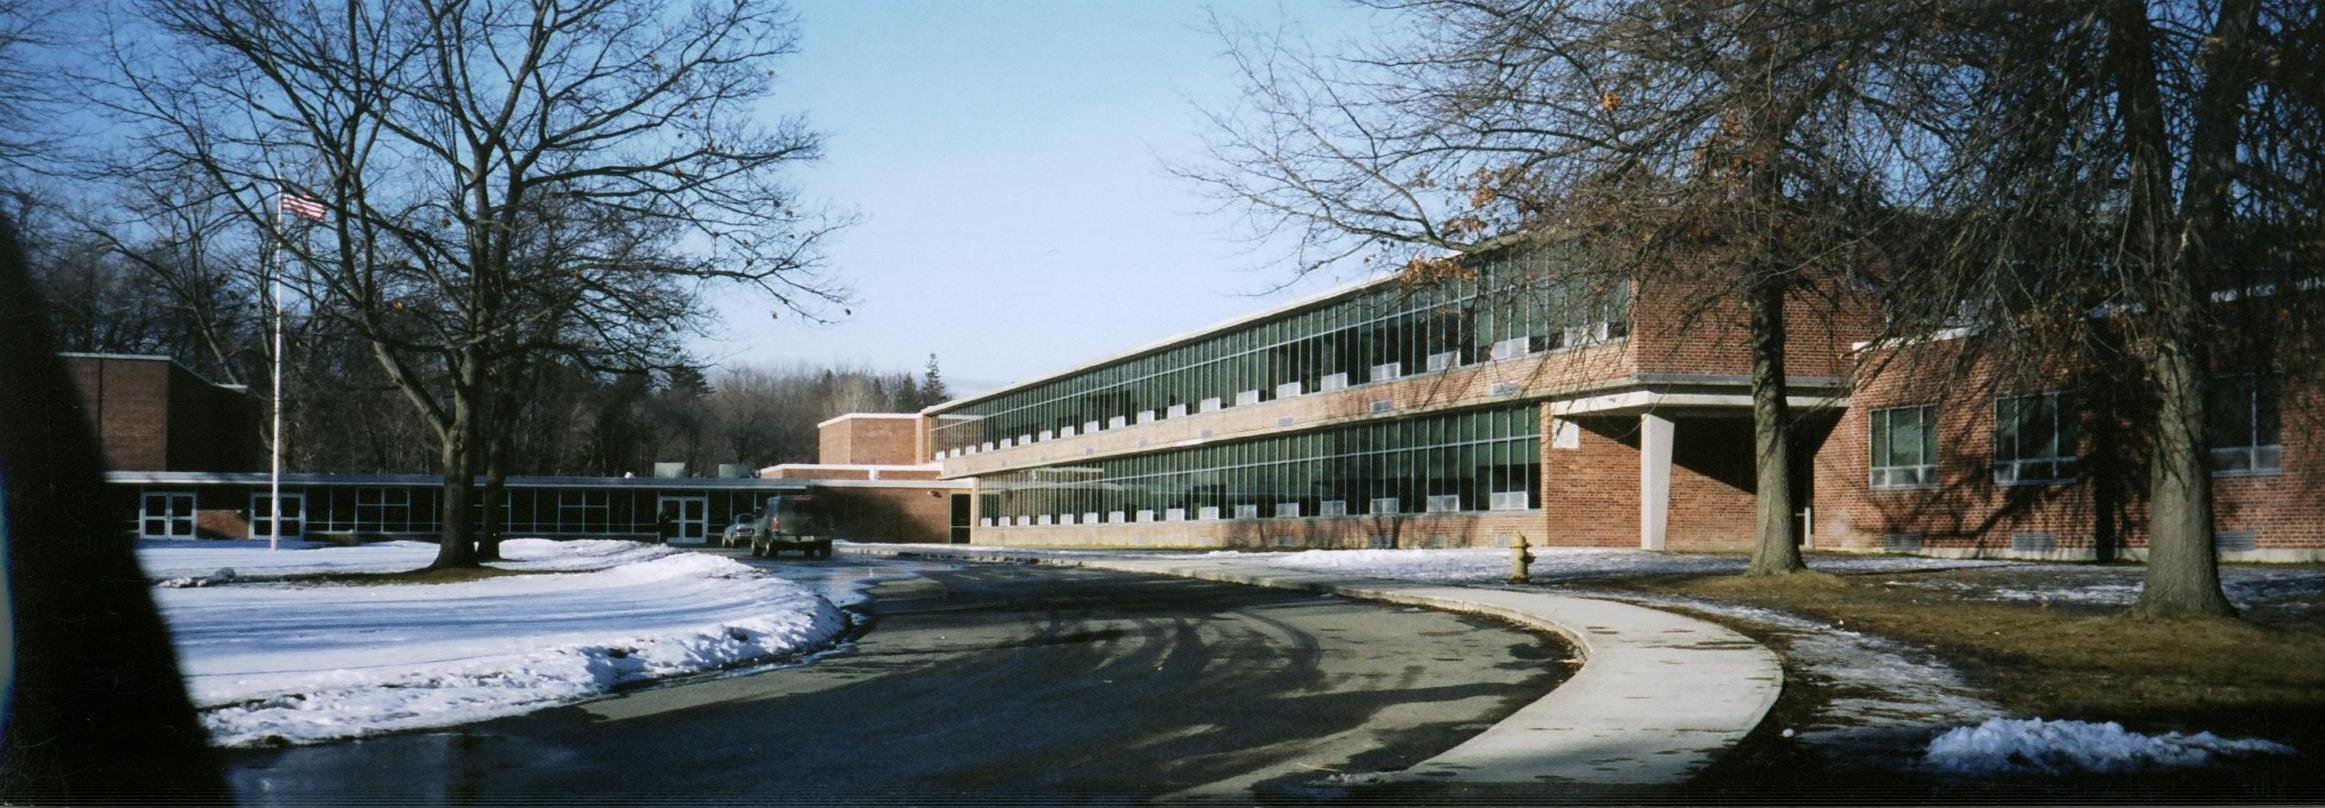  Herberg Middle School, Pittsfield, Massachusetts 